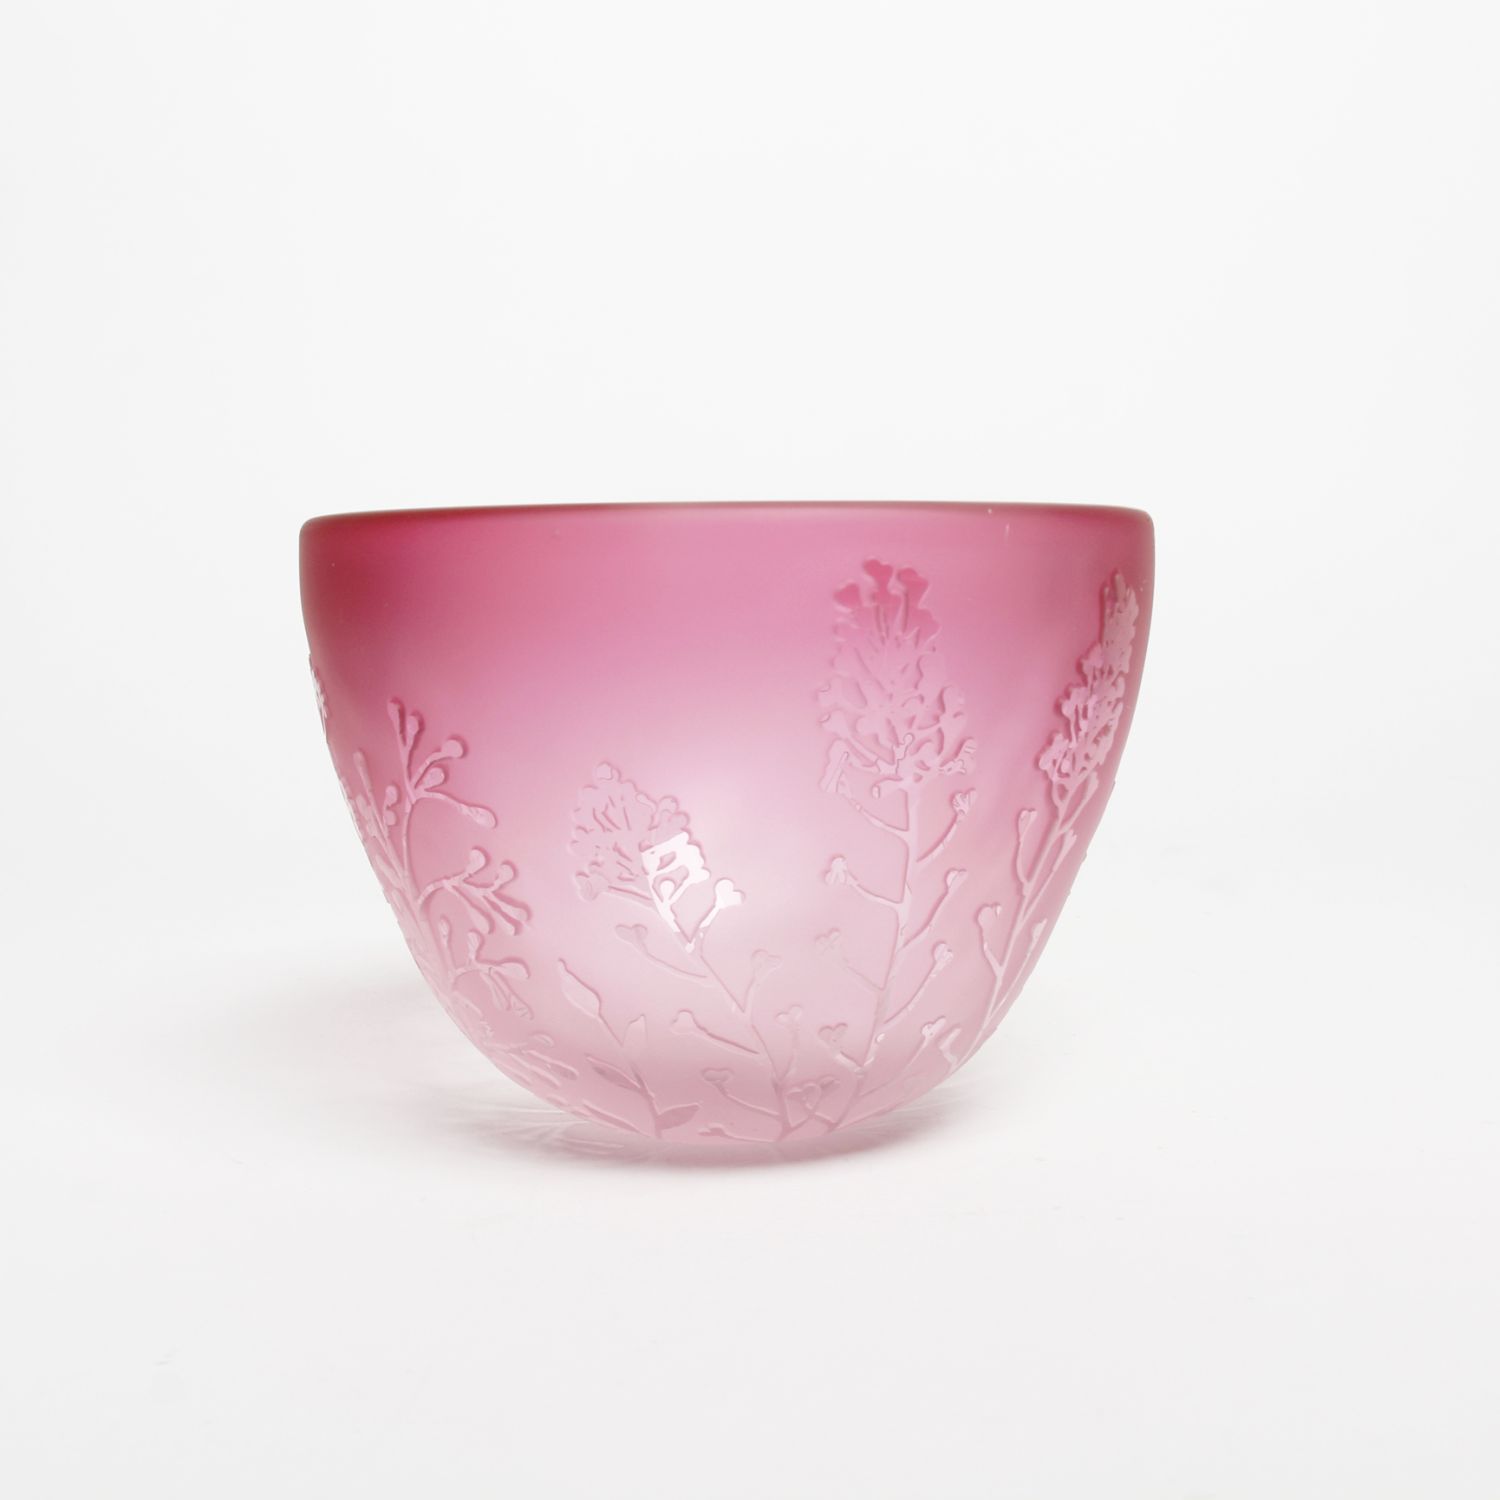 Carol Nesbitt: Big Pink Bowl Glass Product Image 2 of 2